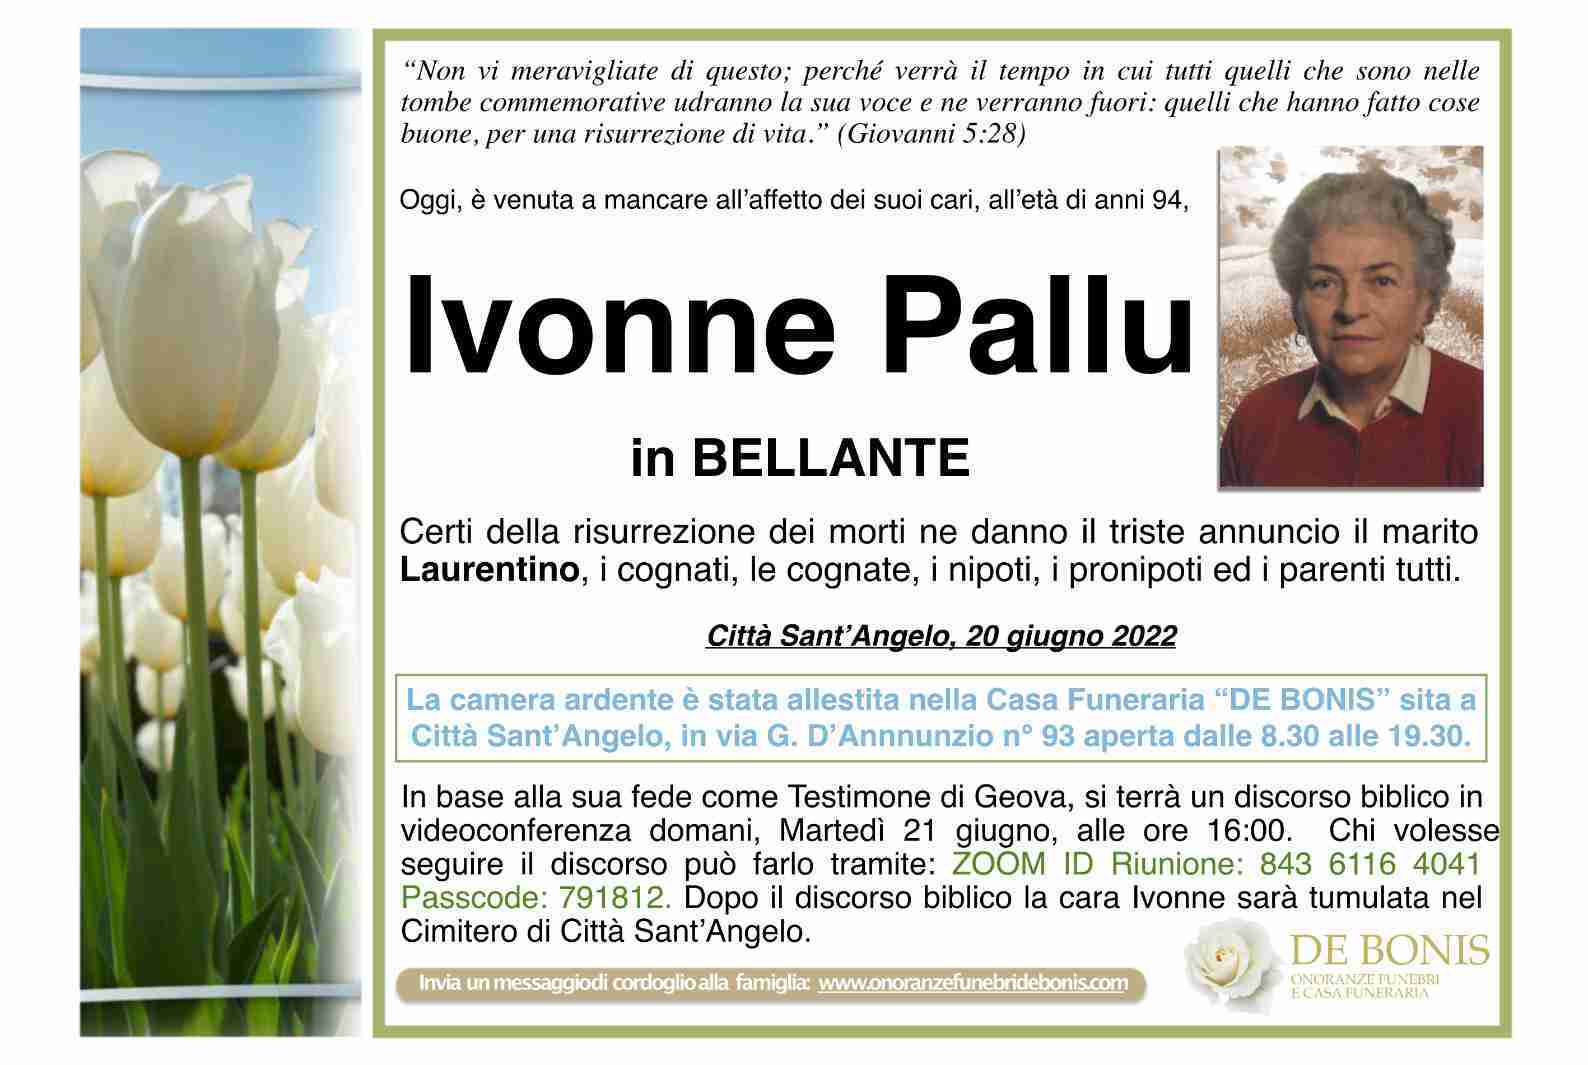 Ivonne Pallu